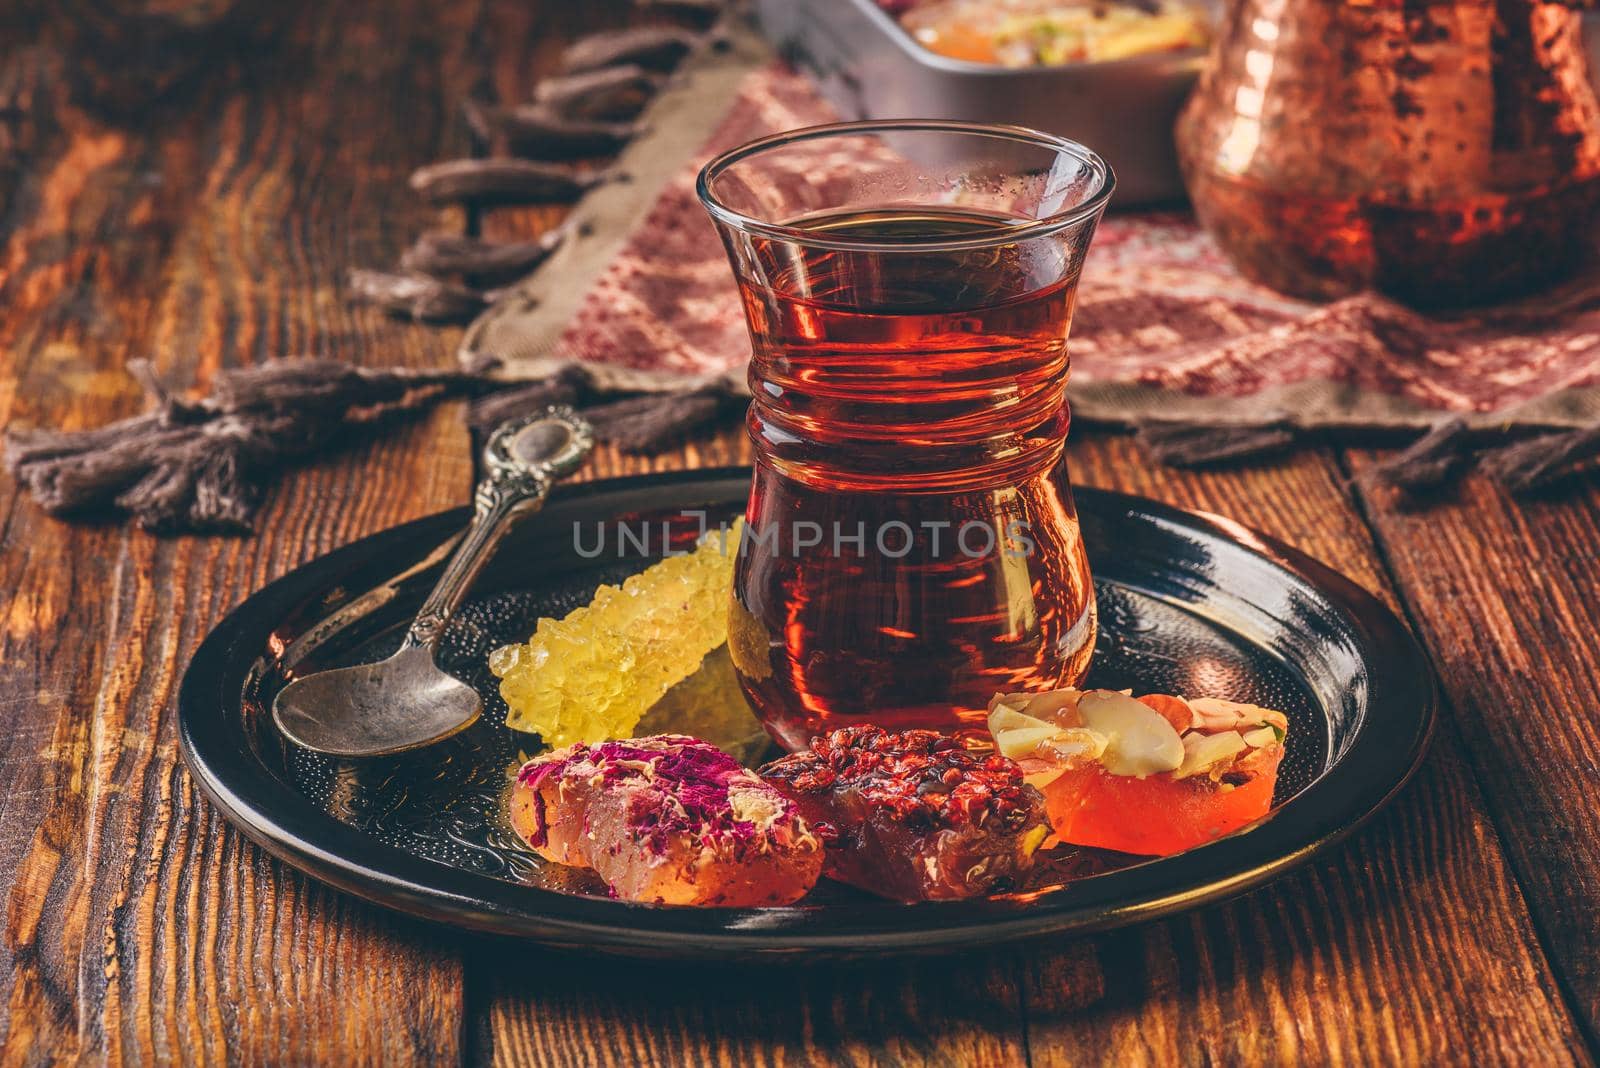 Tea in armudu with oriental delight by Seva_blsv